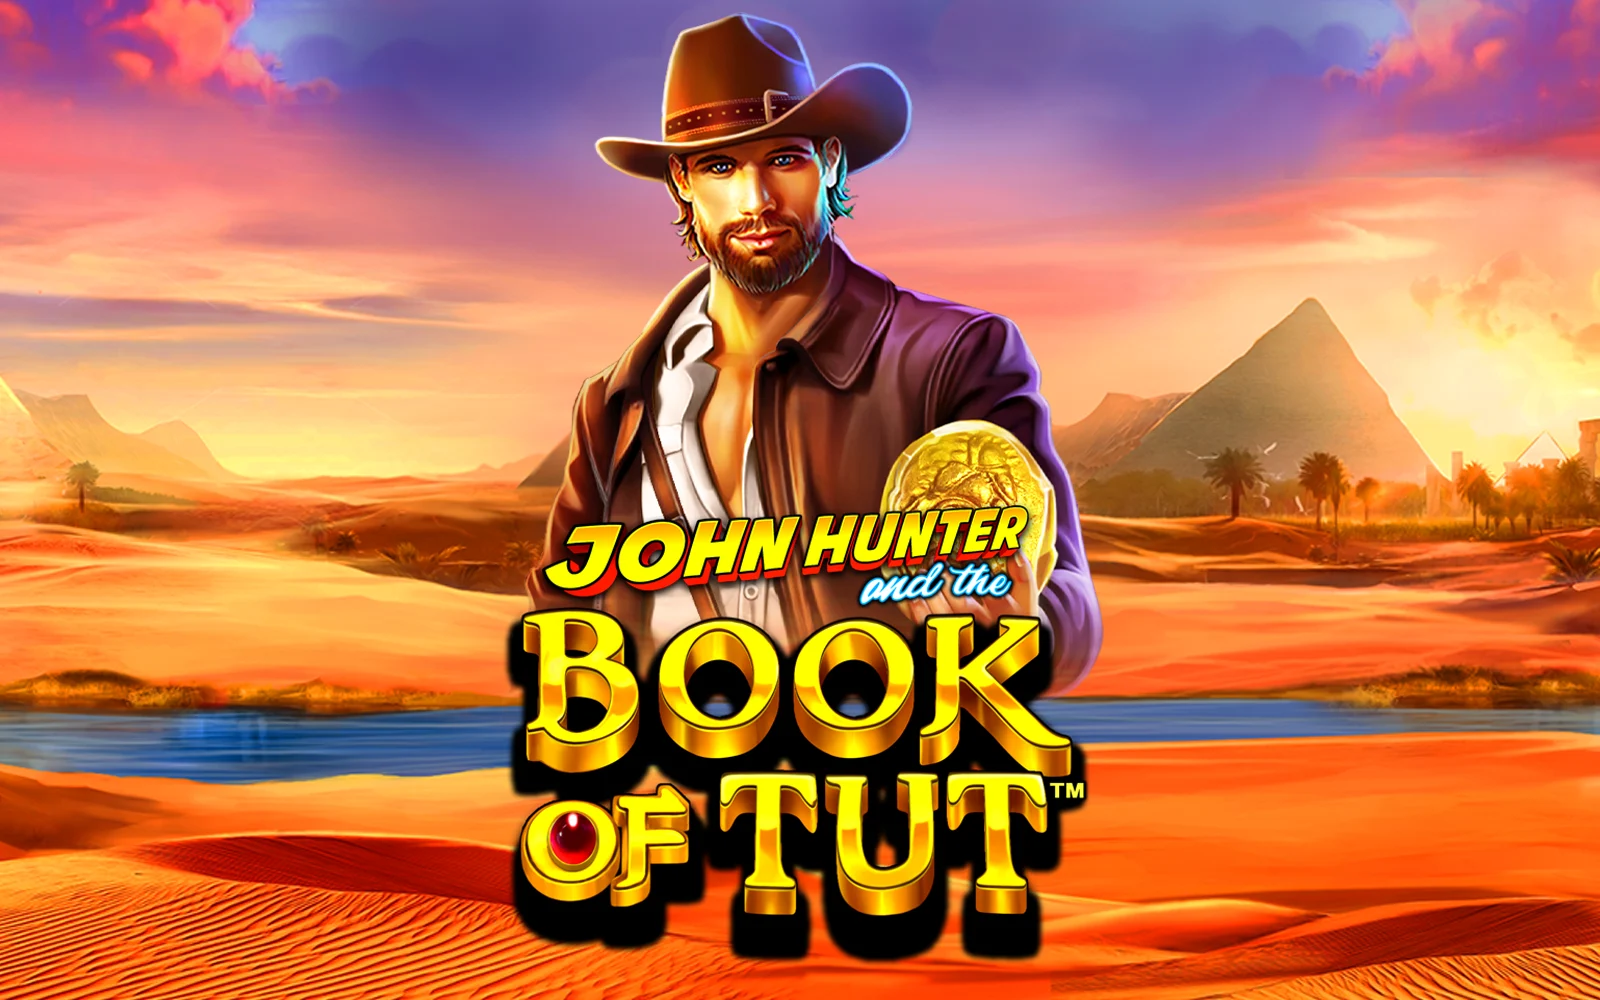 Gioca a John Hunter and the Book of Tut™ sul casino online Starcasino.be